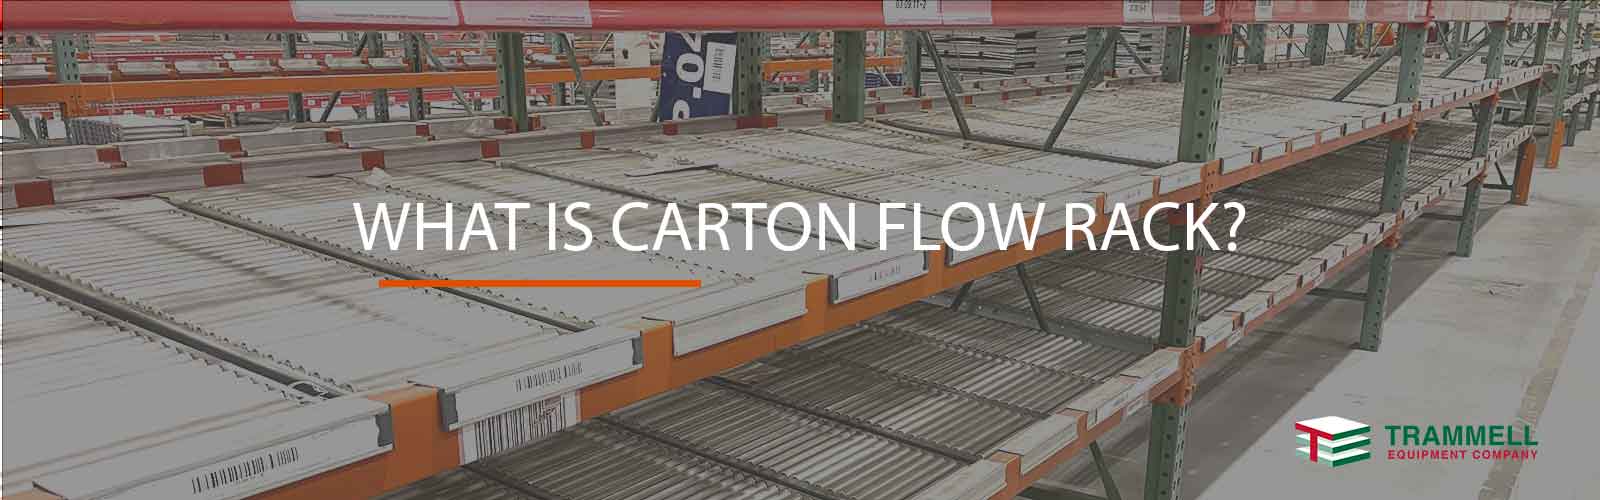 What is Carton Flow Racking?